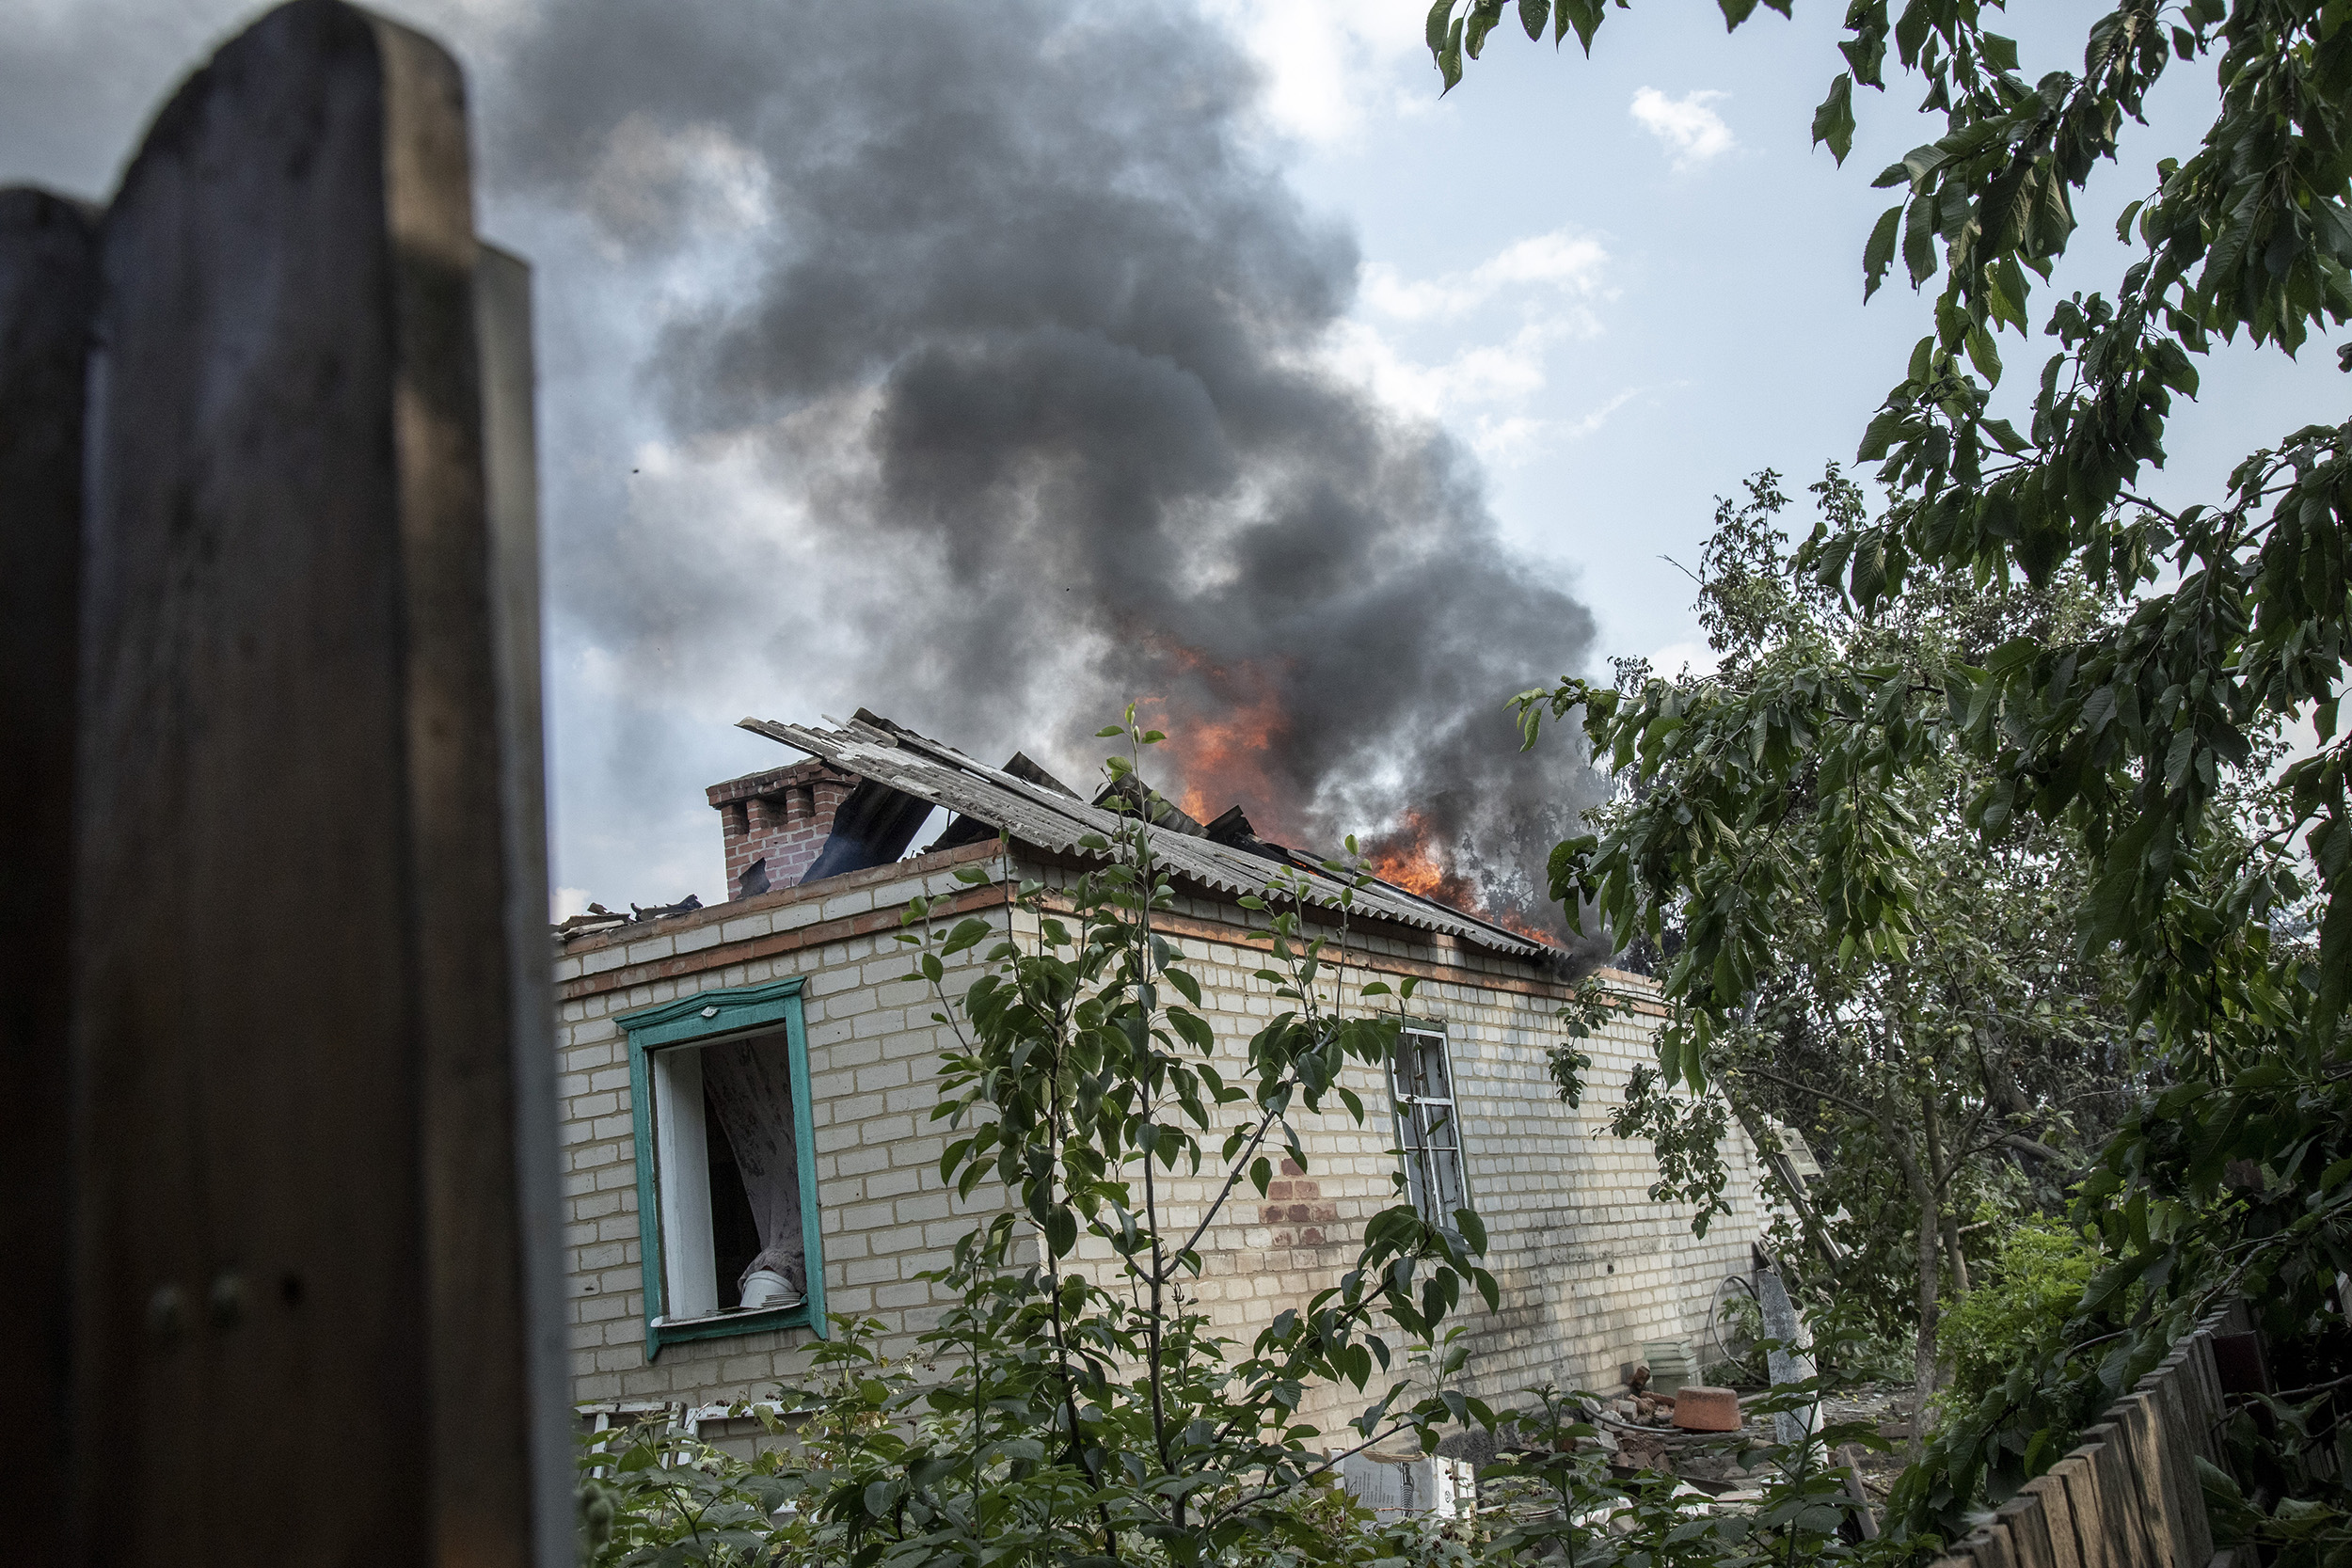 A house burns during shelling in Verkhneokamyansky, Ukraine, July 4.